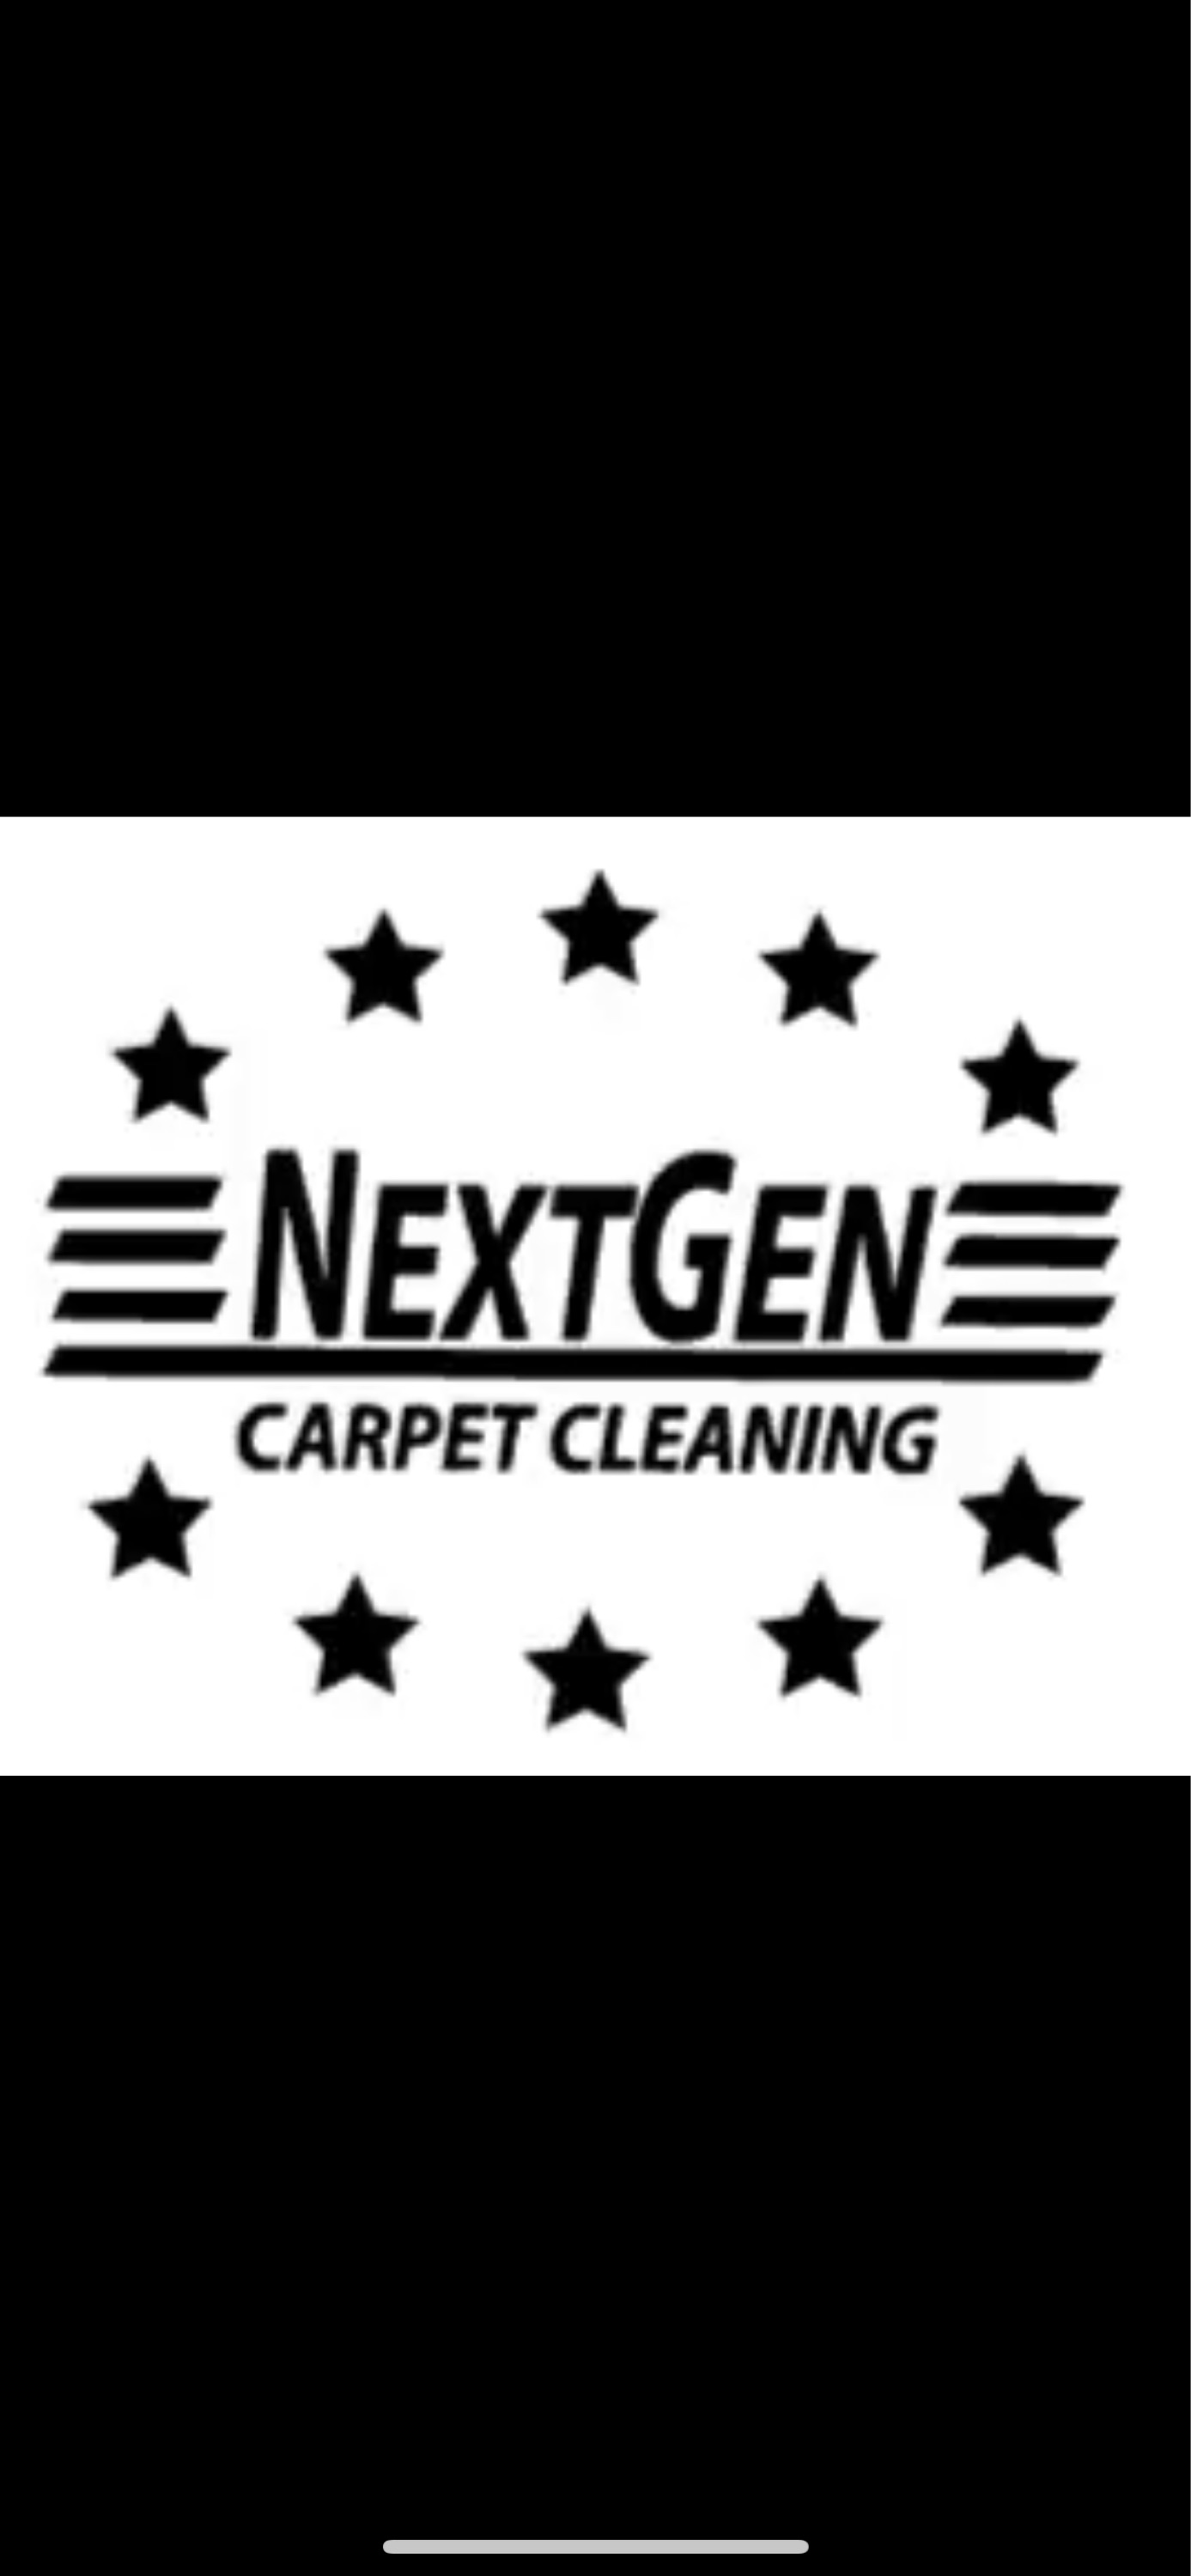 Next Gen Carpet Cleaning Logo